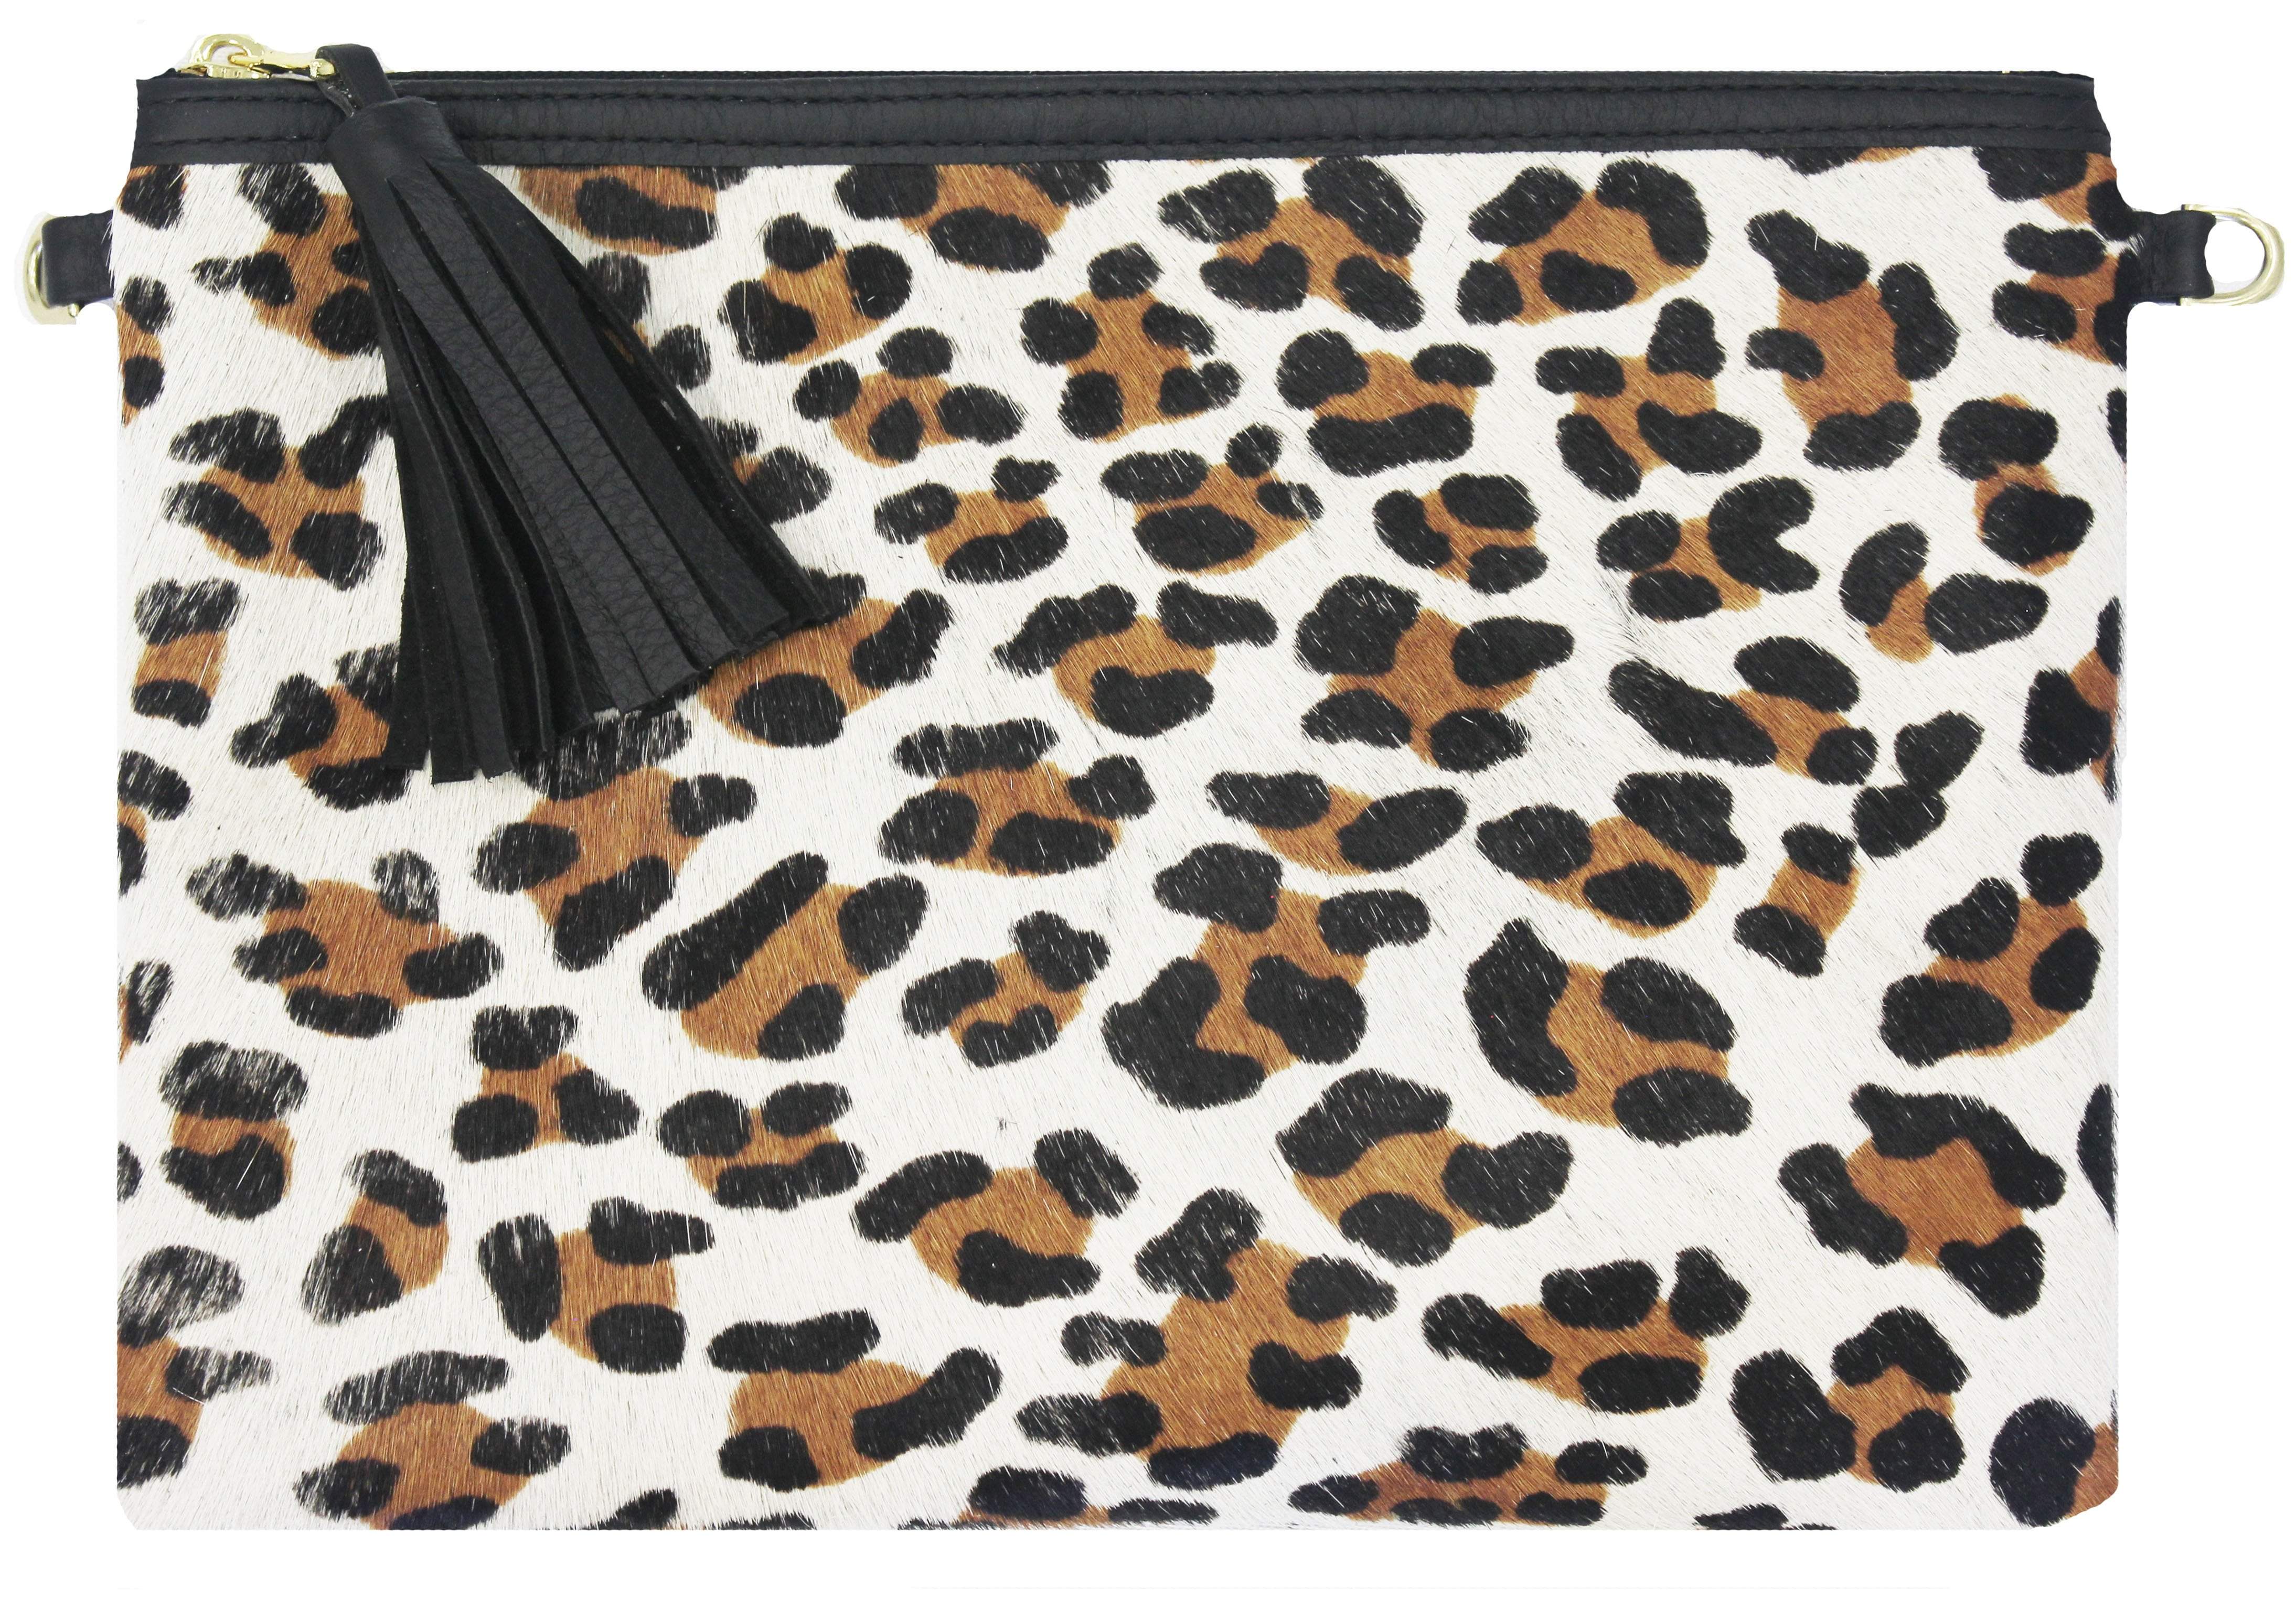 Leopard Hair on Hide Leather Clutch, Versatile 4-way Bag